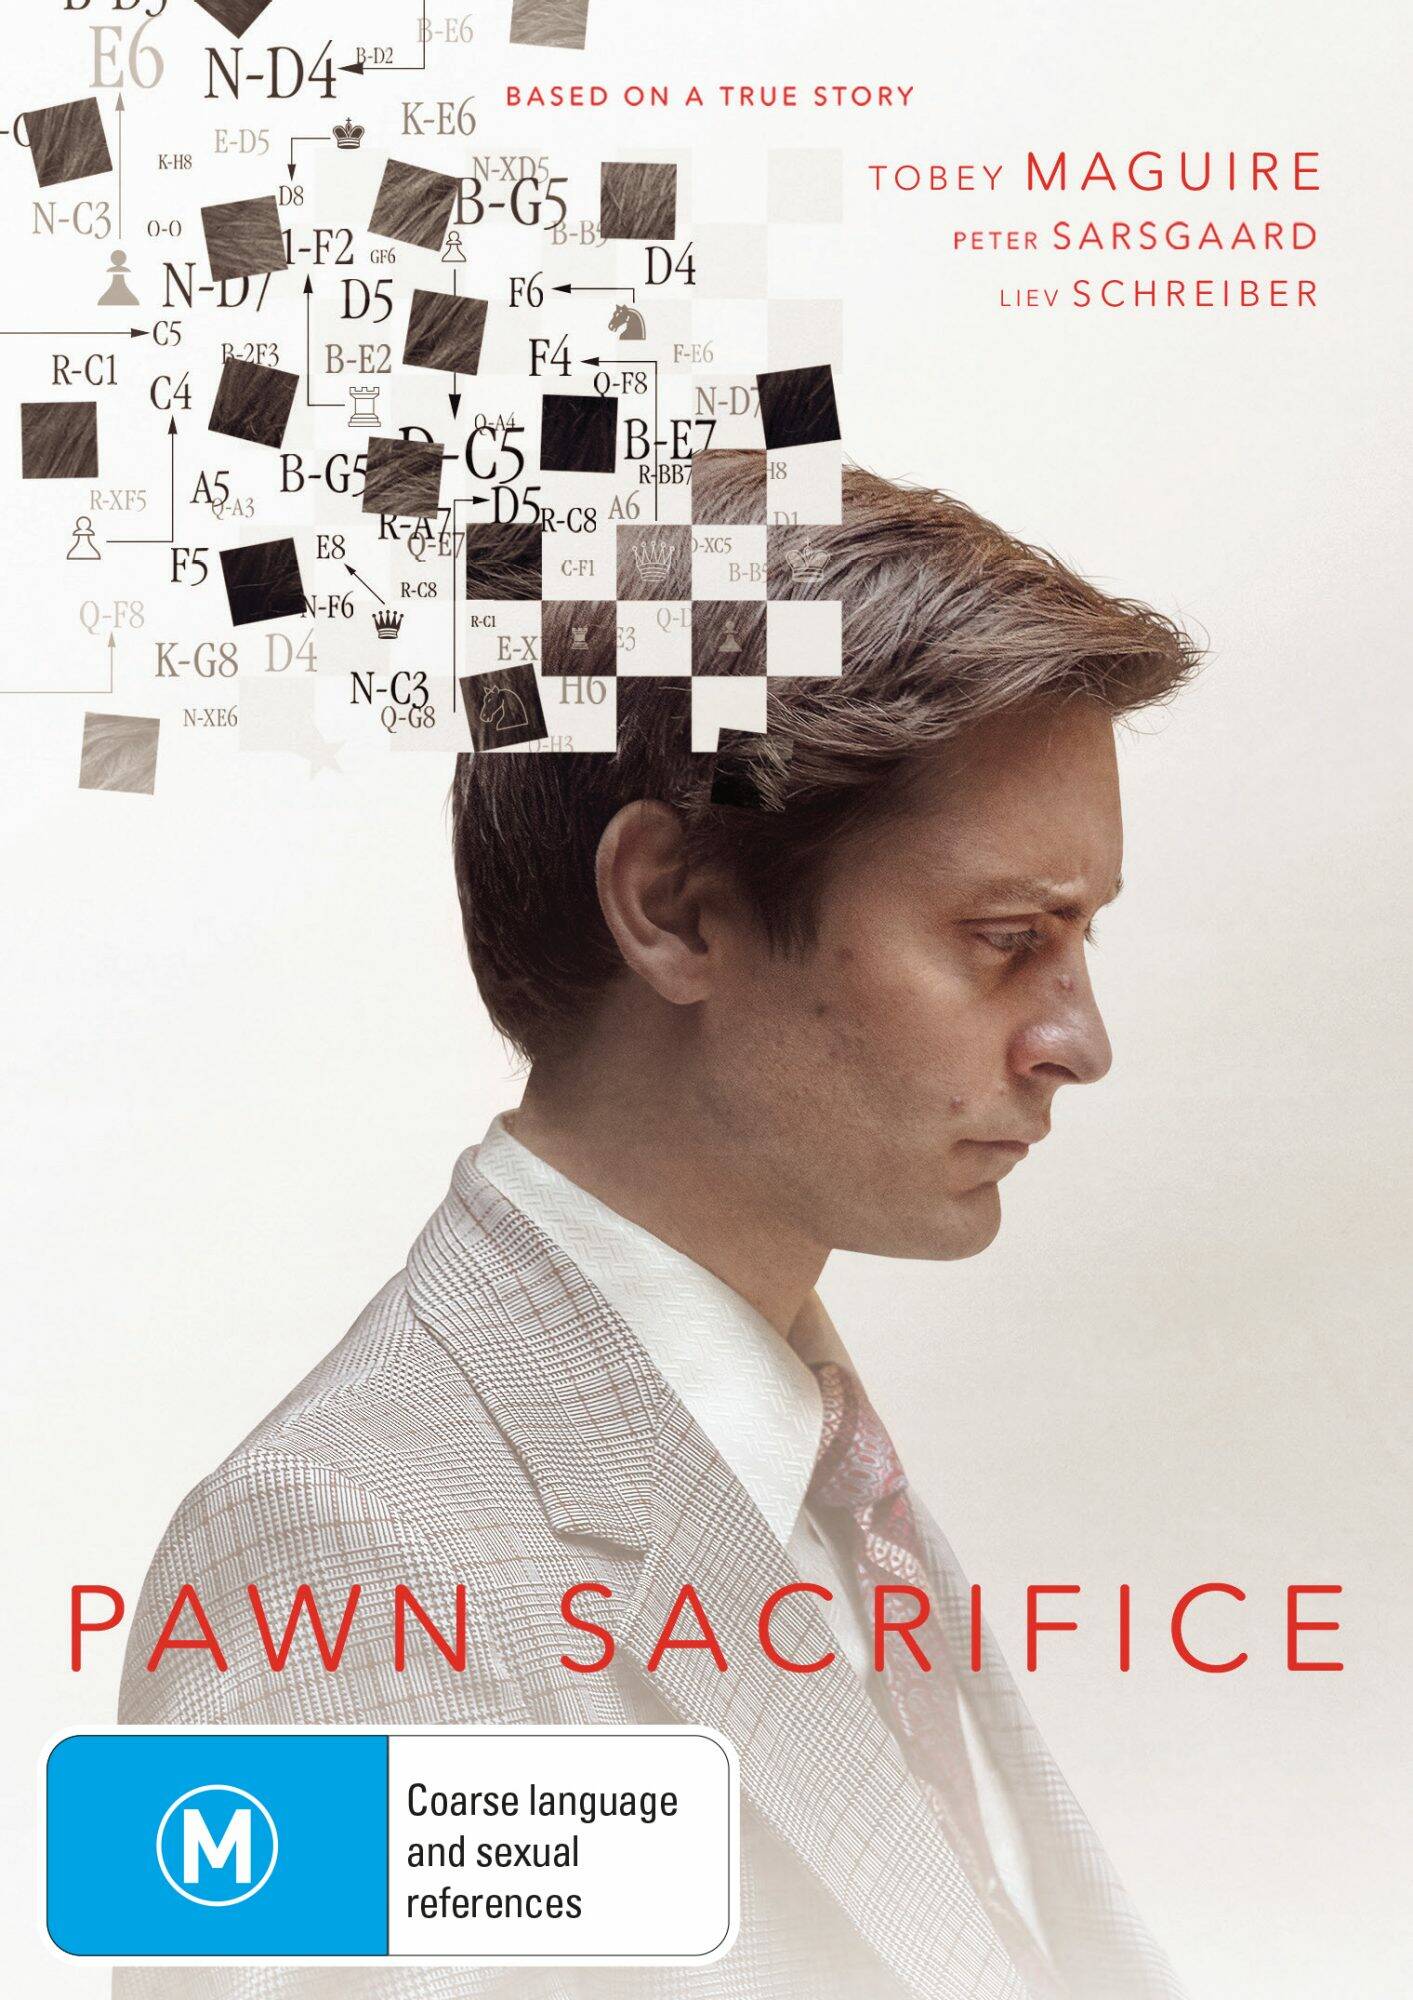 Pawn Sacrifice [ DVD ] @